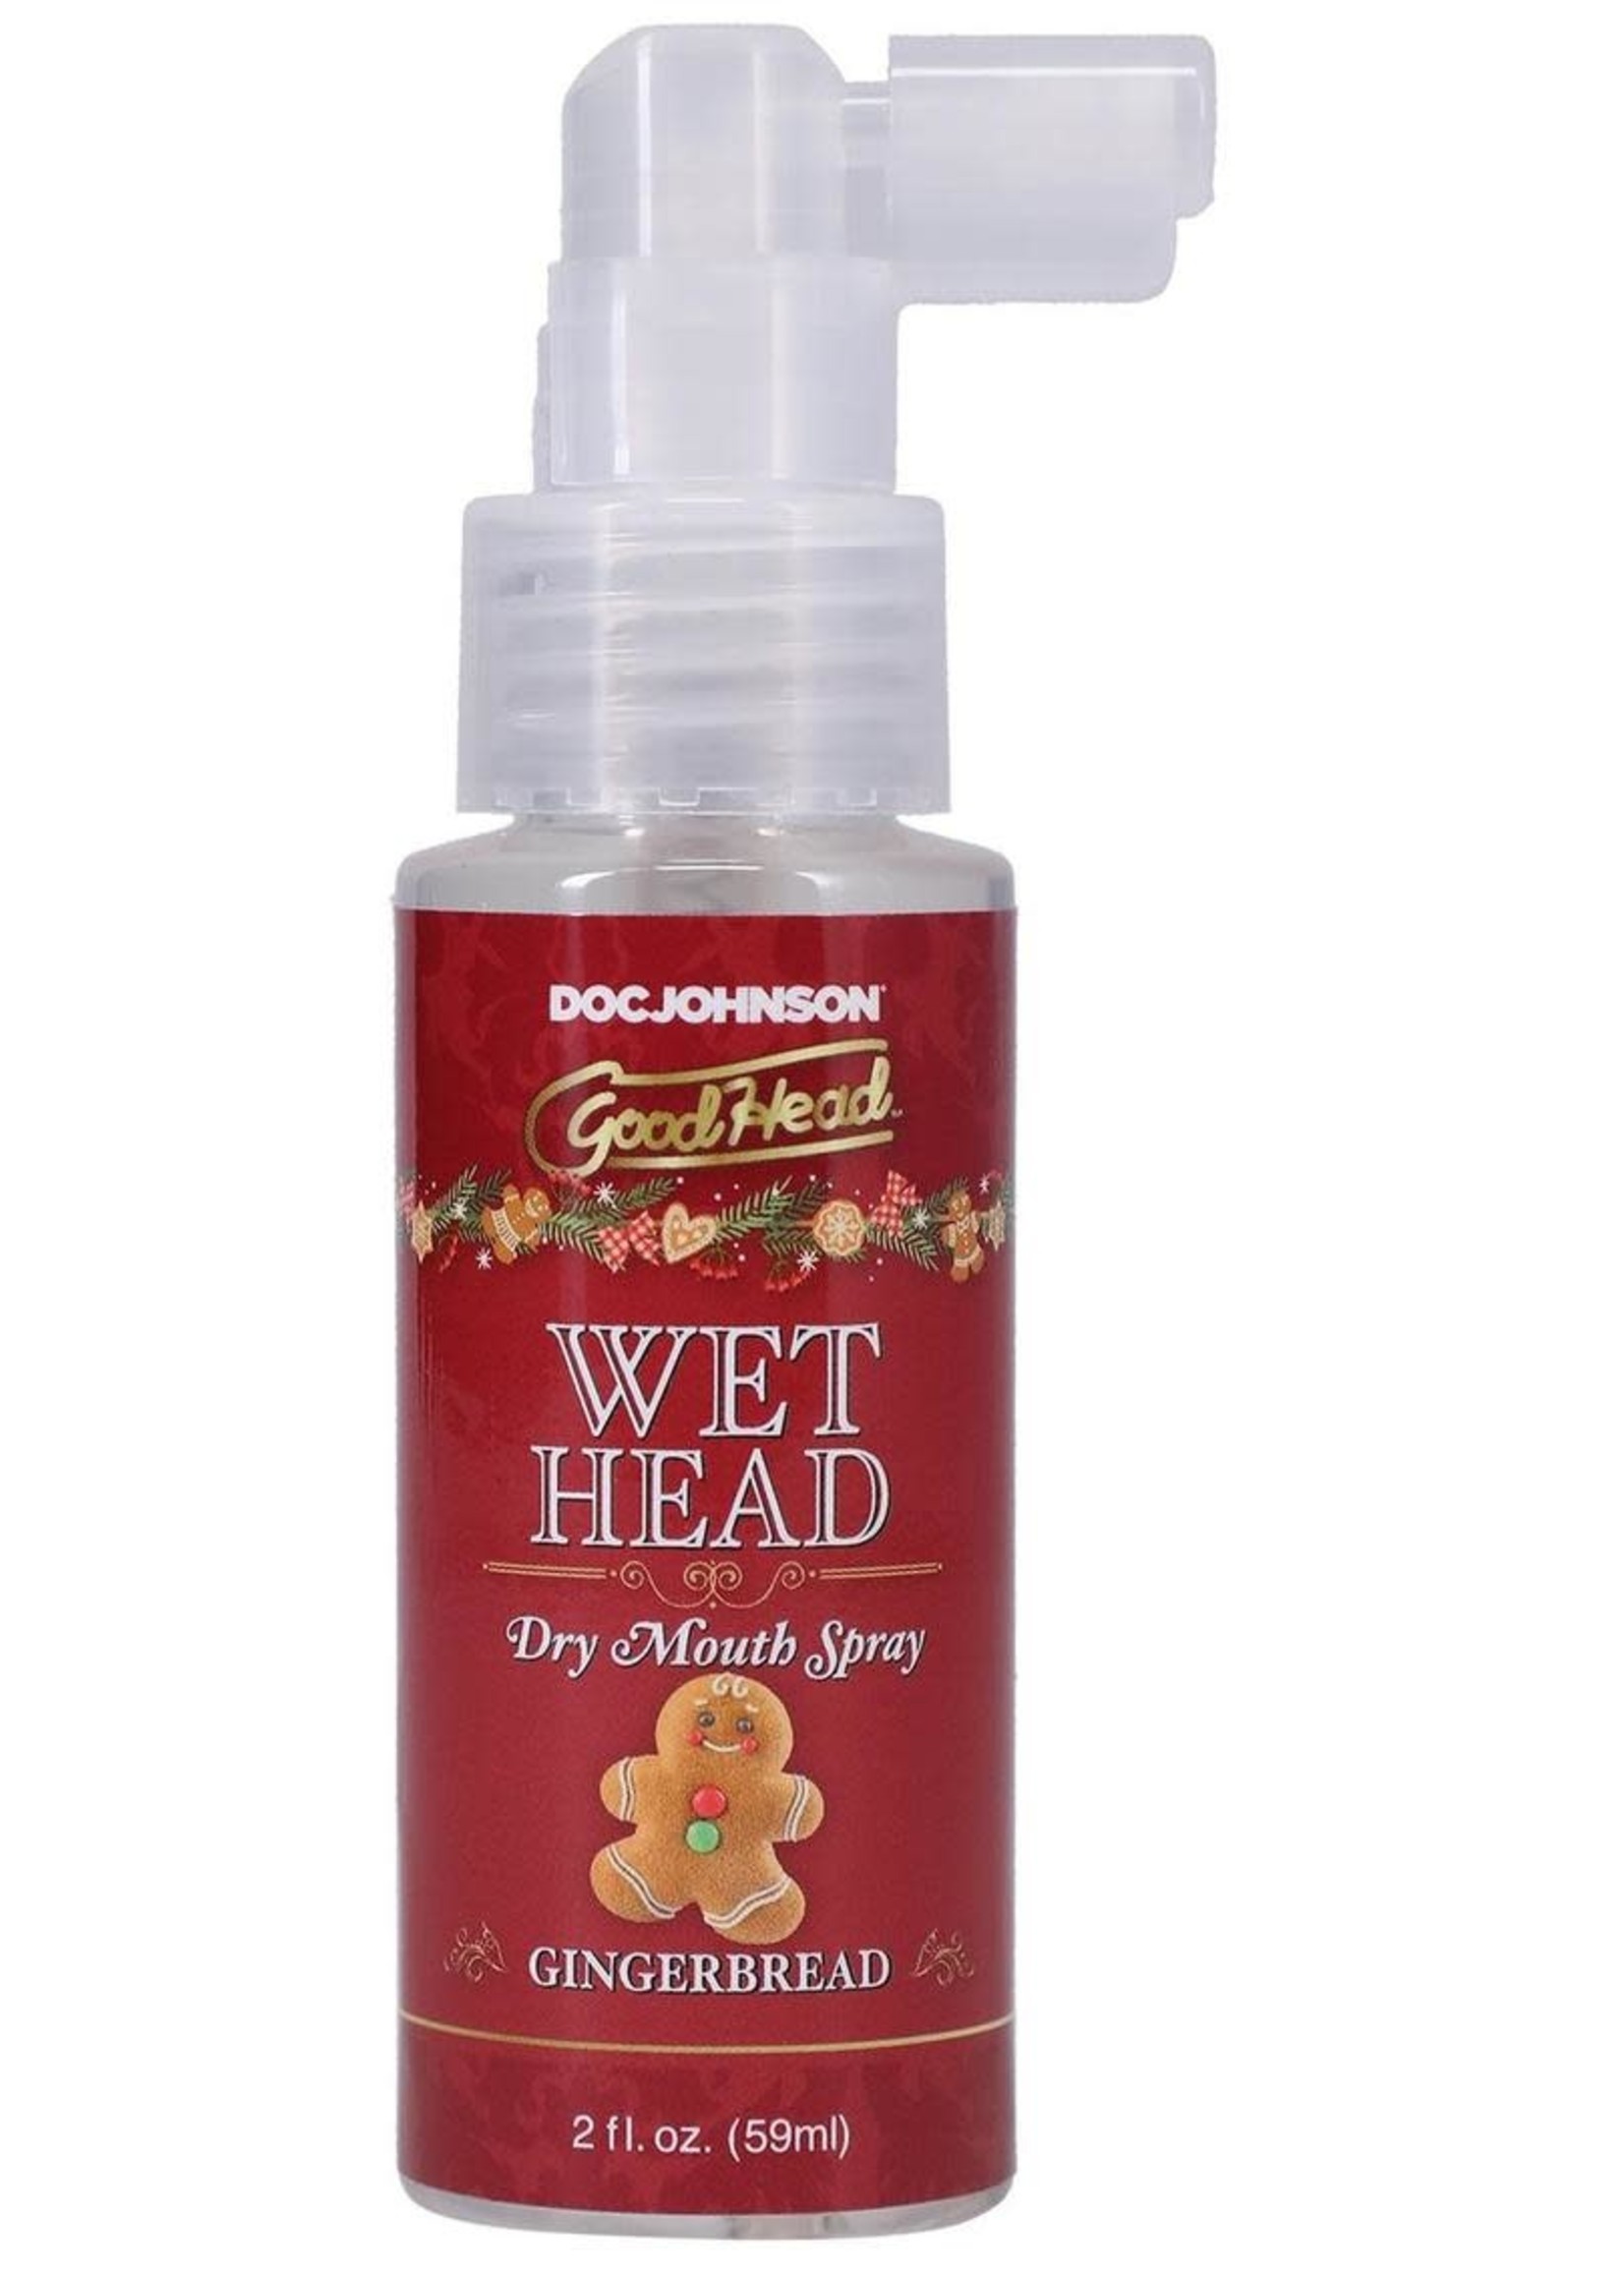 GoodHead Holiday Wet Head Dry Mouth Spray 2oz - Gingerbread Head